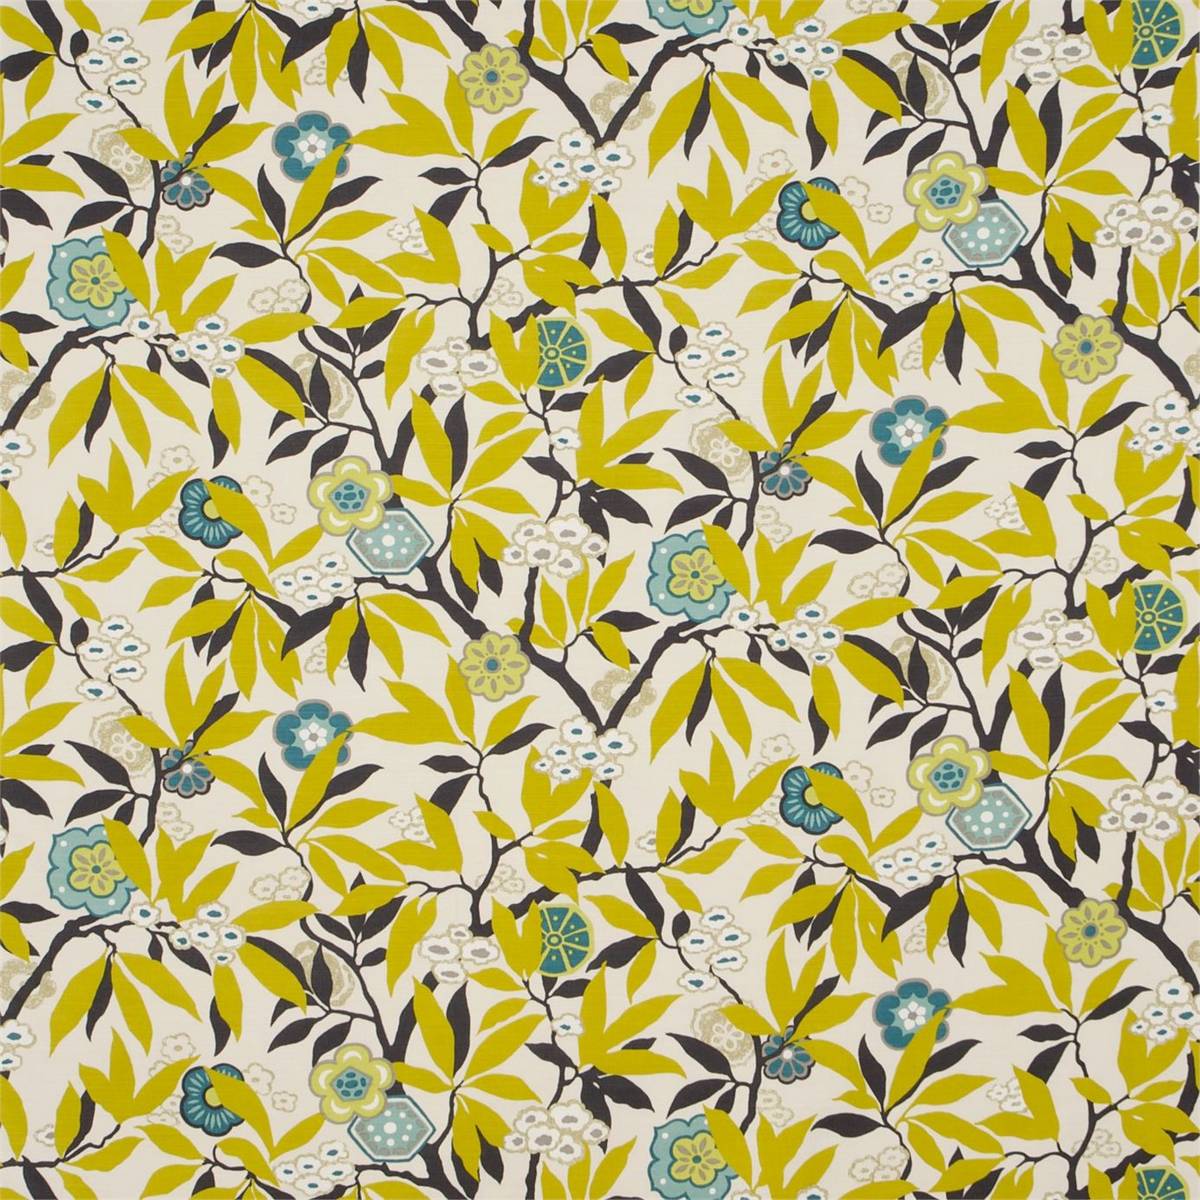 Primavera Chaffinch Fabric by Sanderson